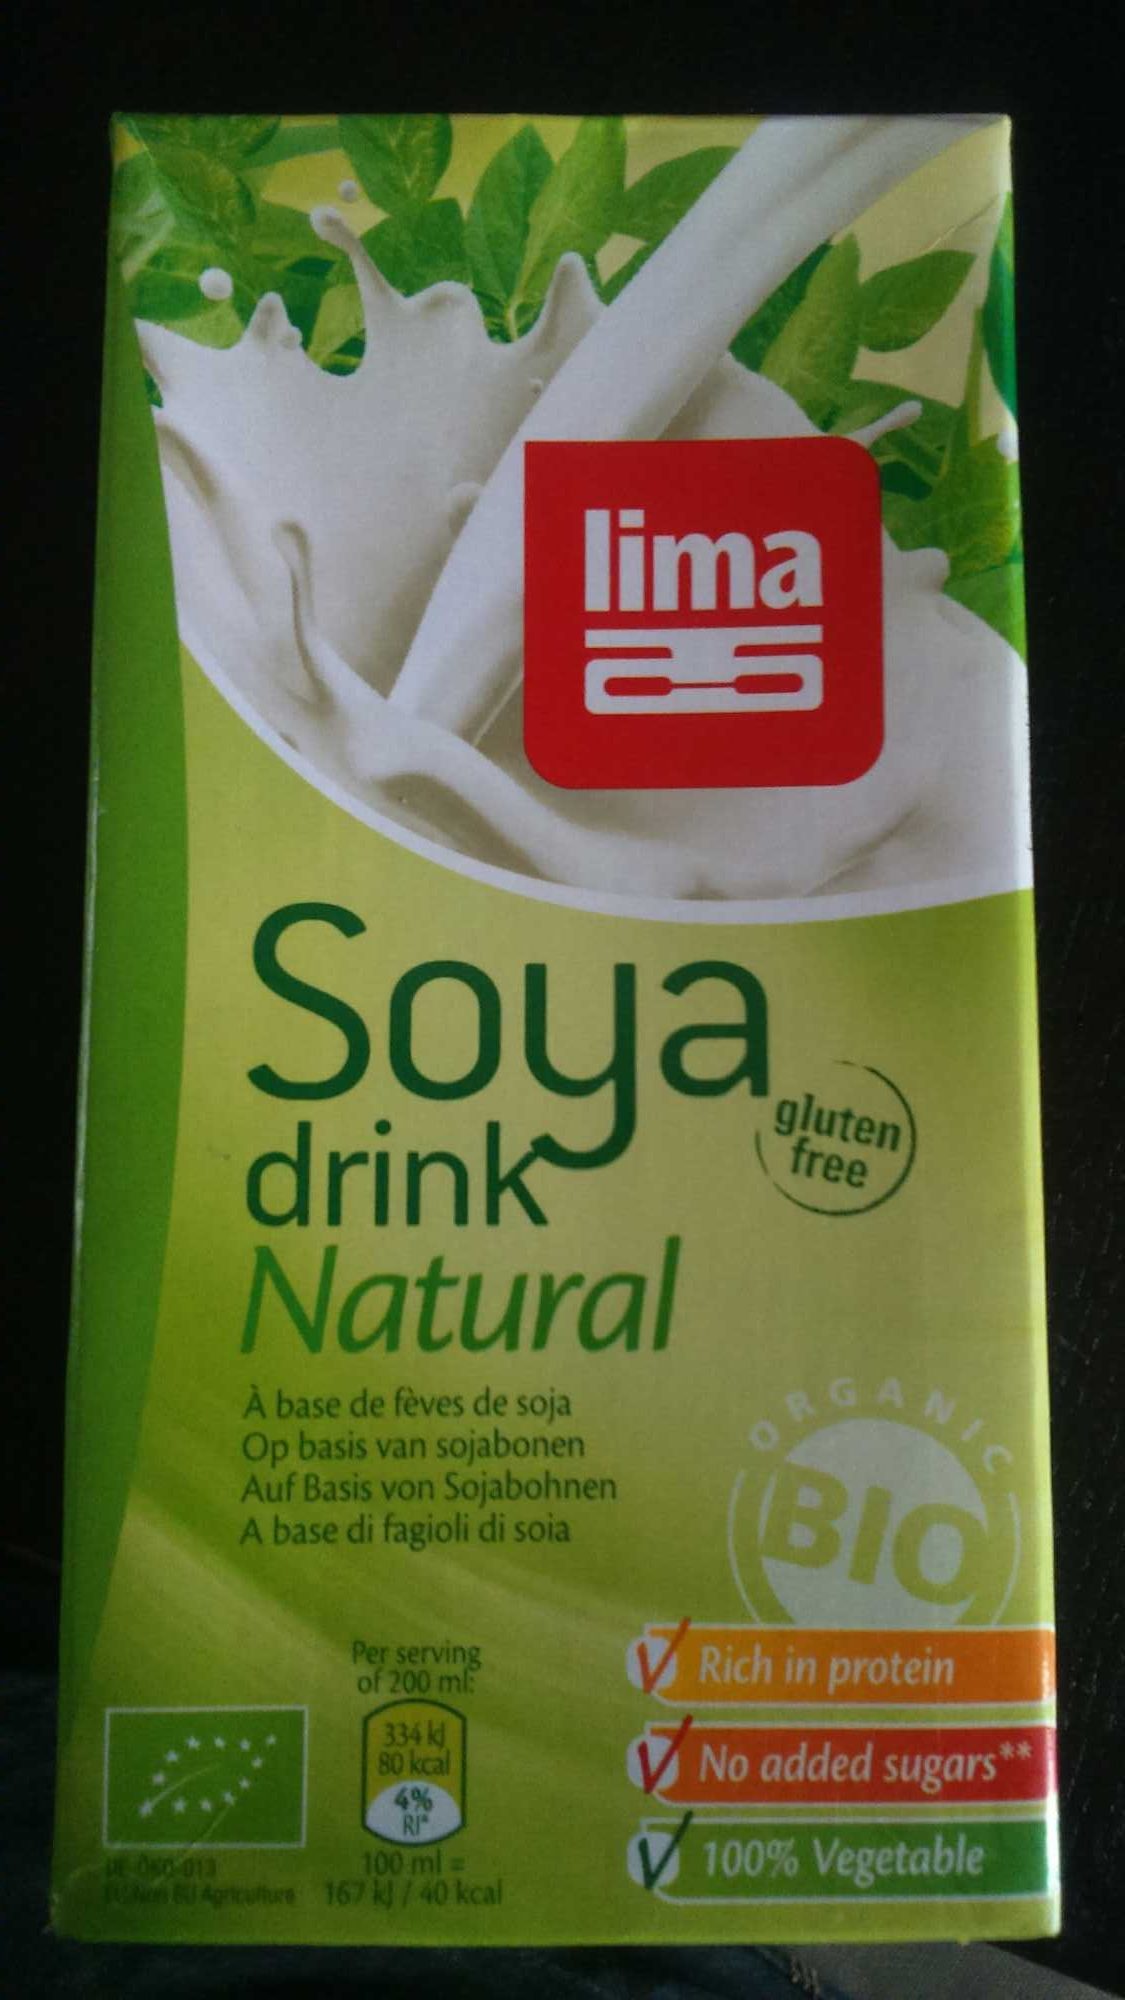 Soya drink natural - Prodotto - fr